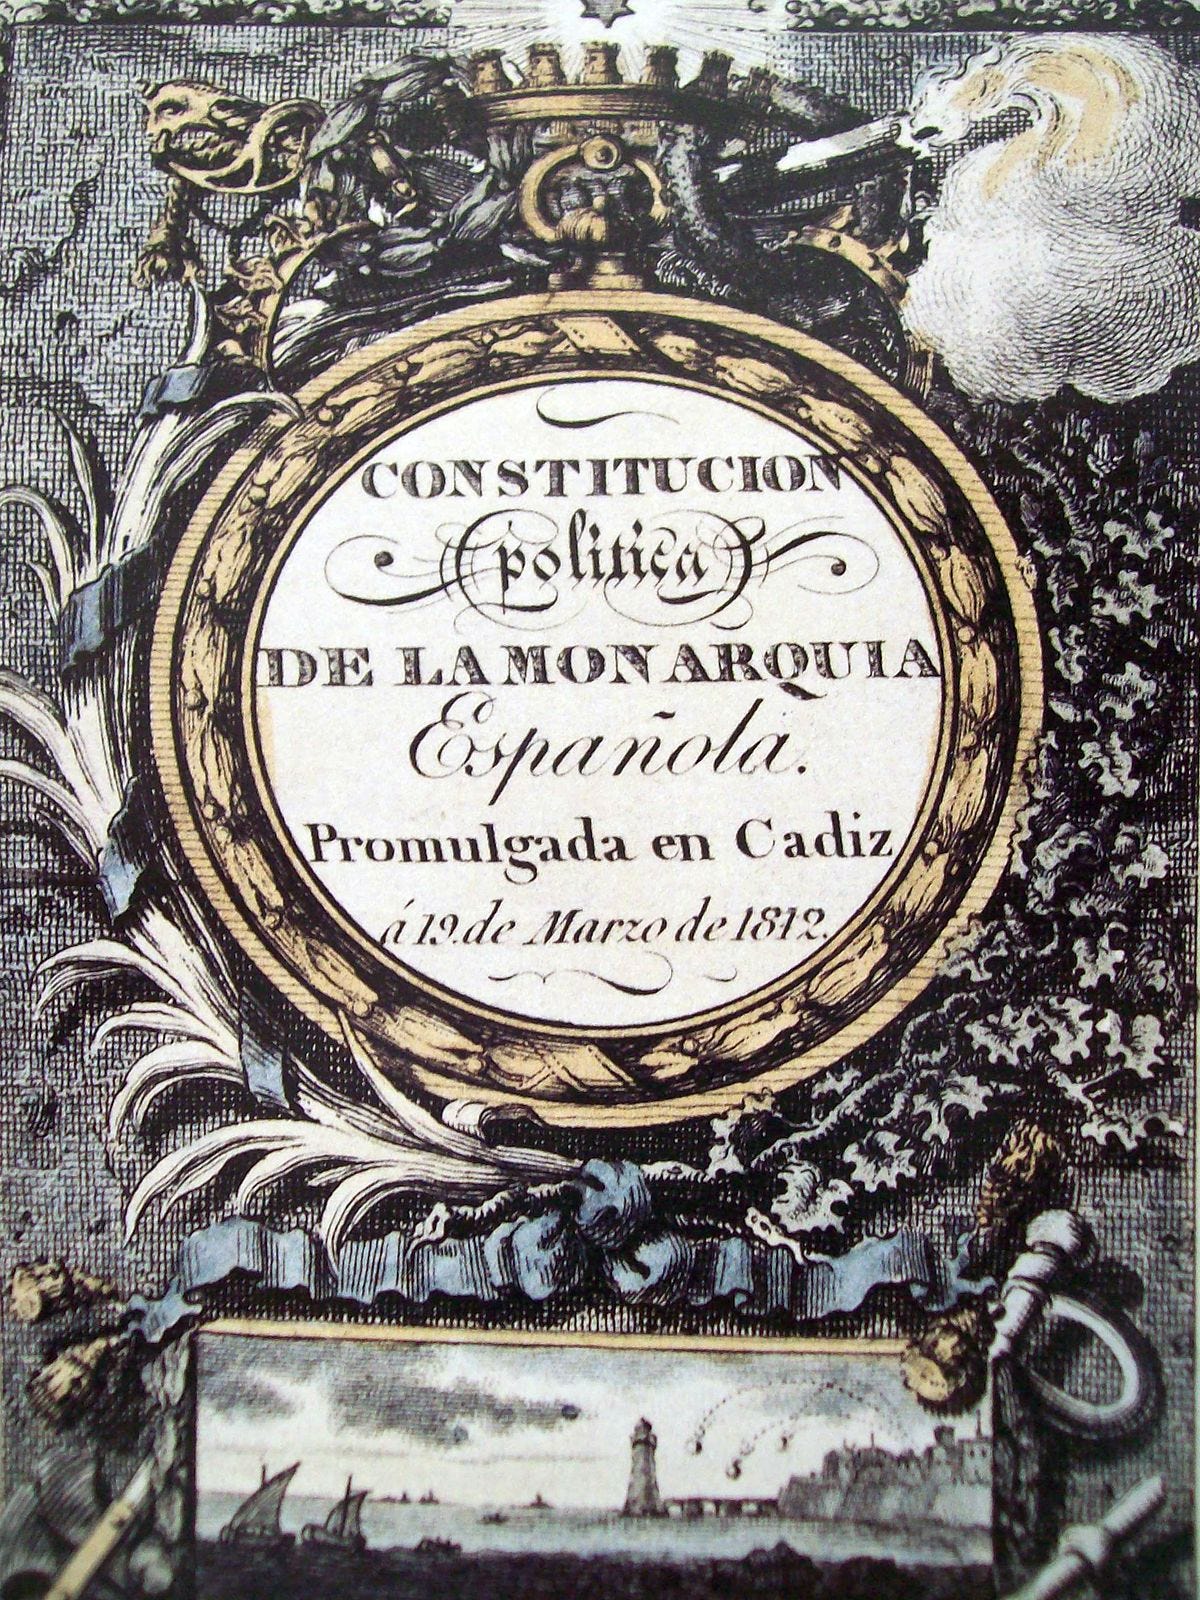 Spanish Constitution of 1812 - Wikidata